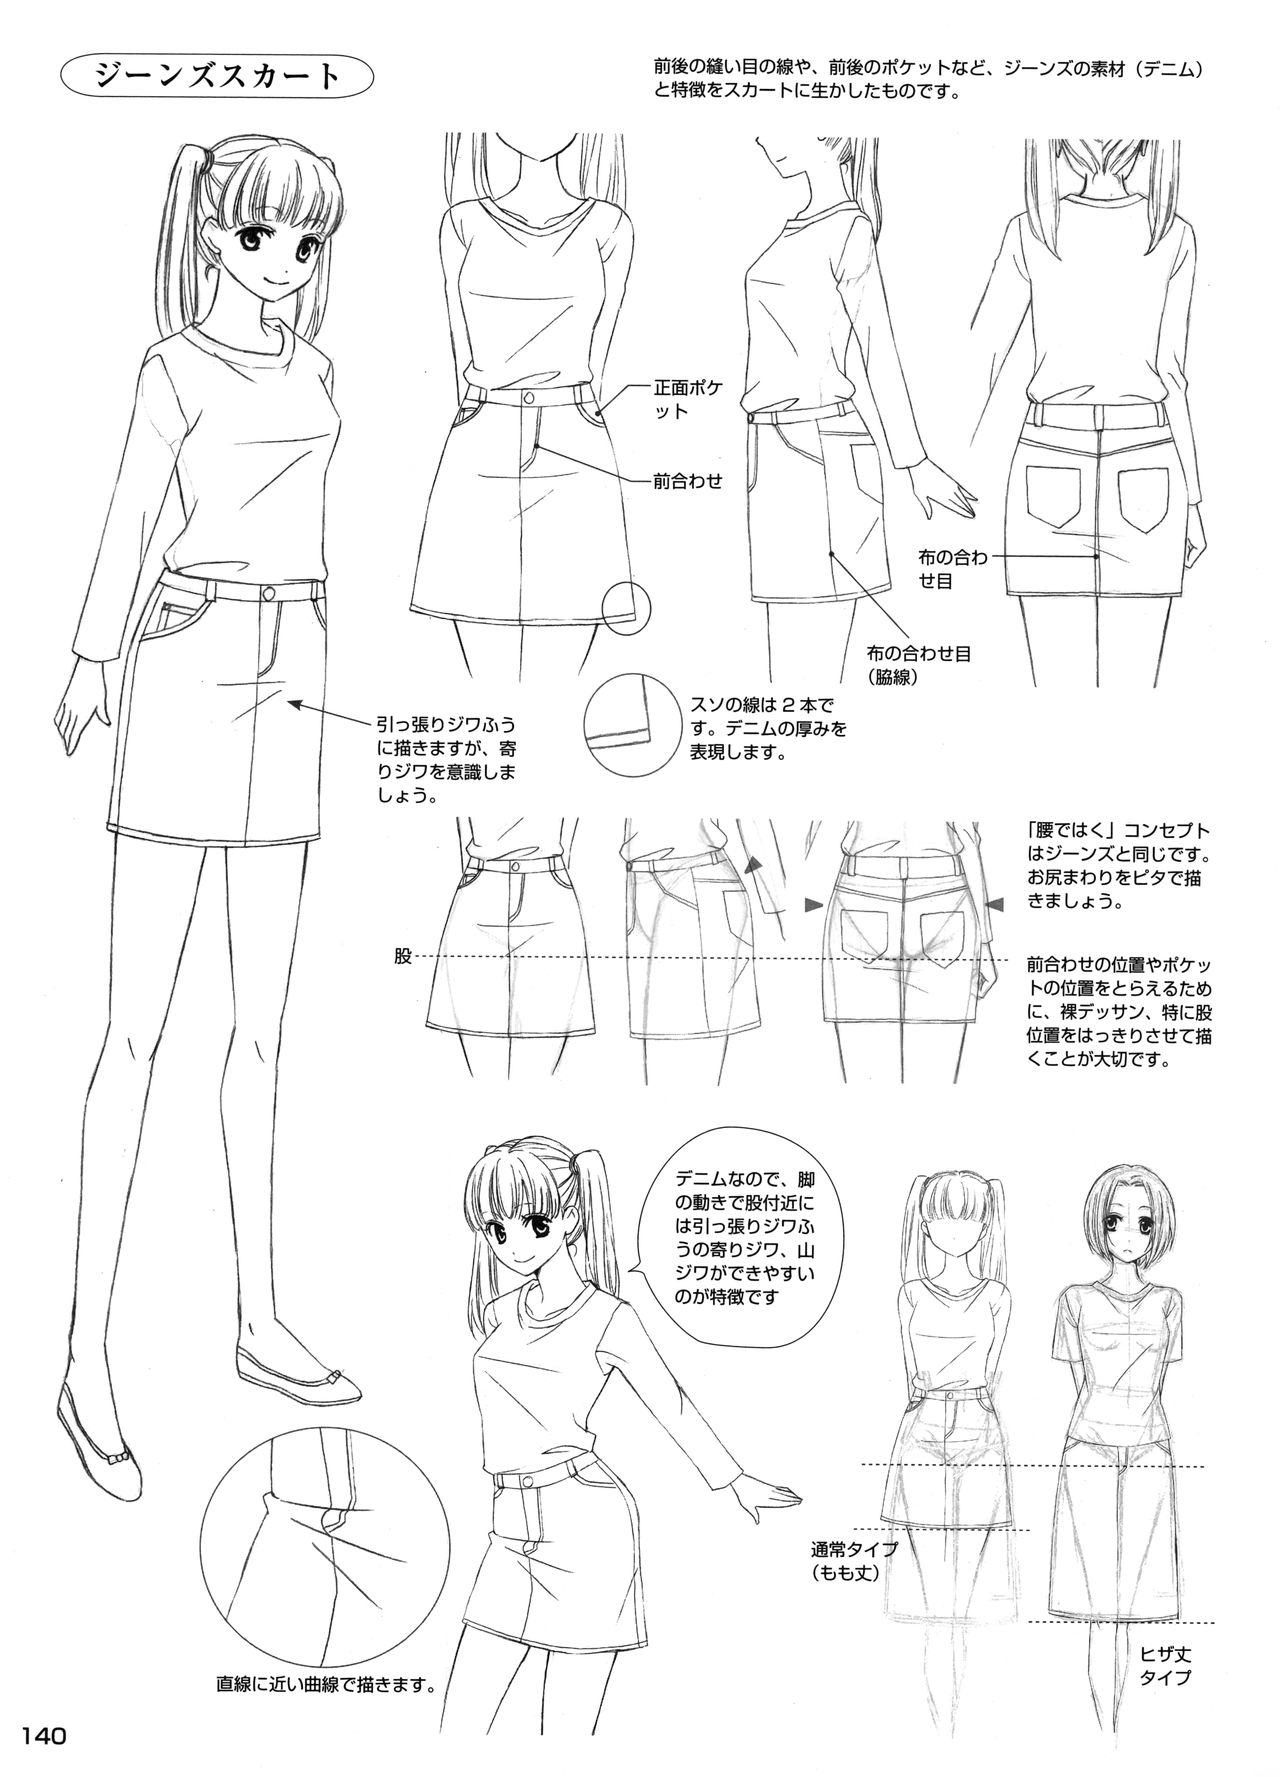 Manga no Kiso Dessin - Onnanoko Costume hen 140